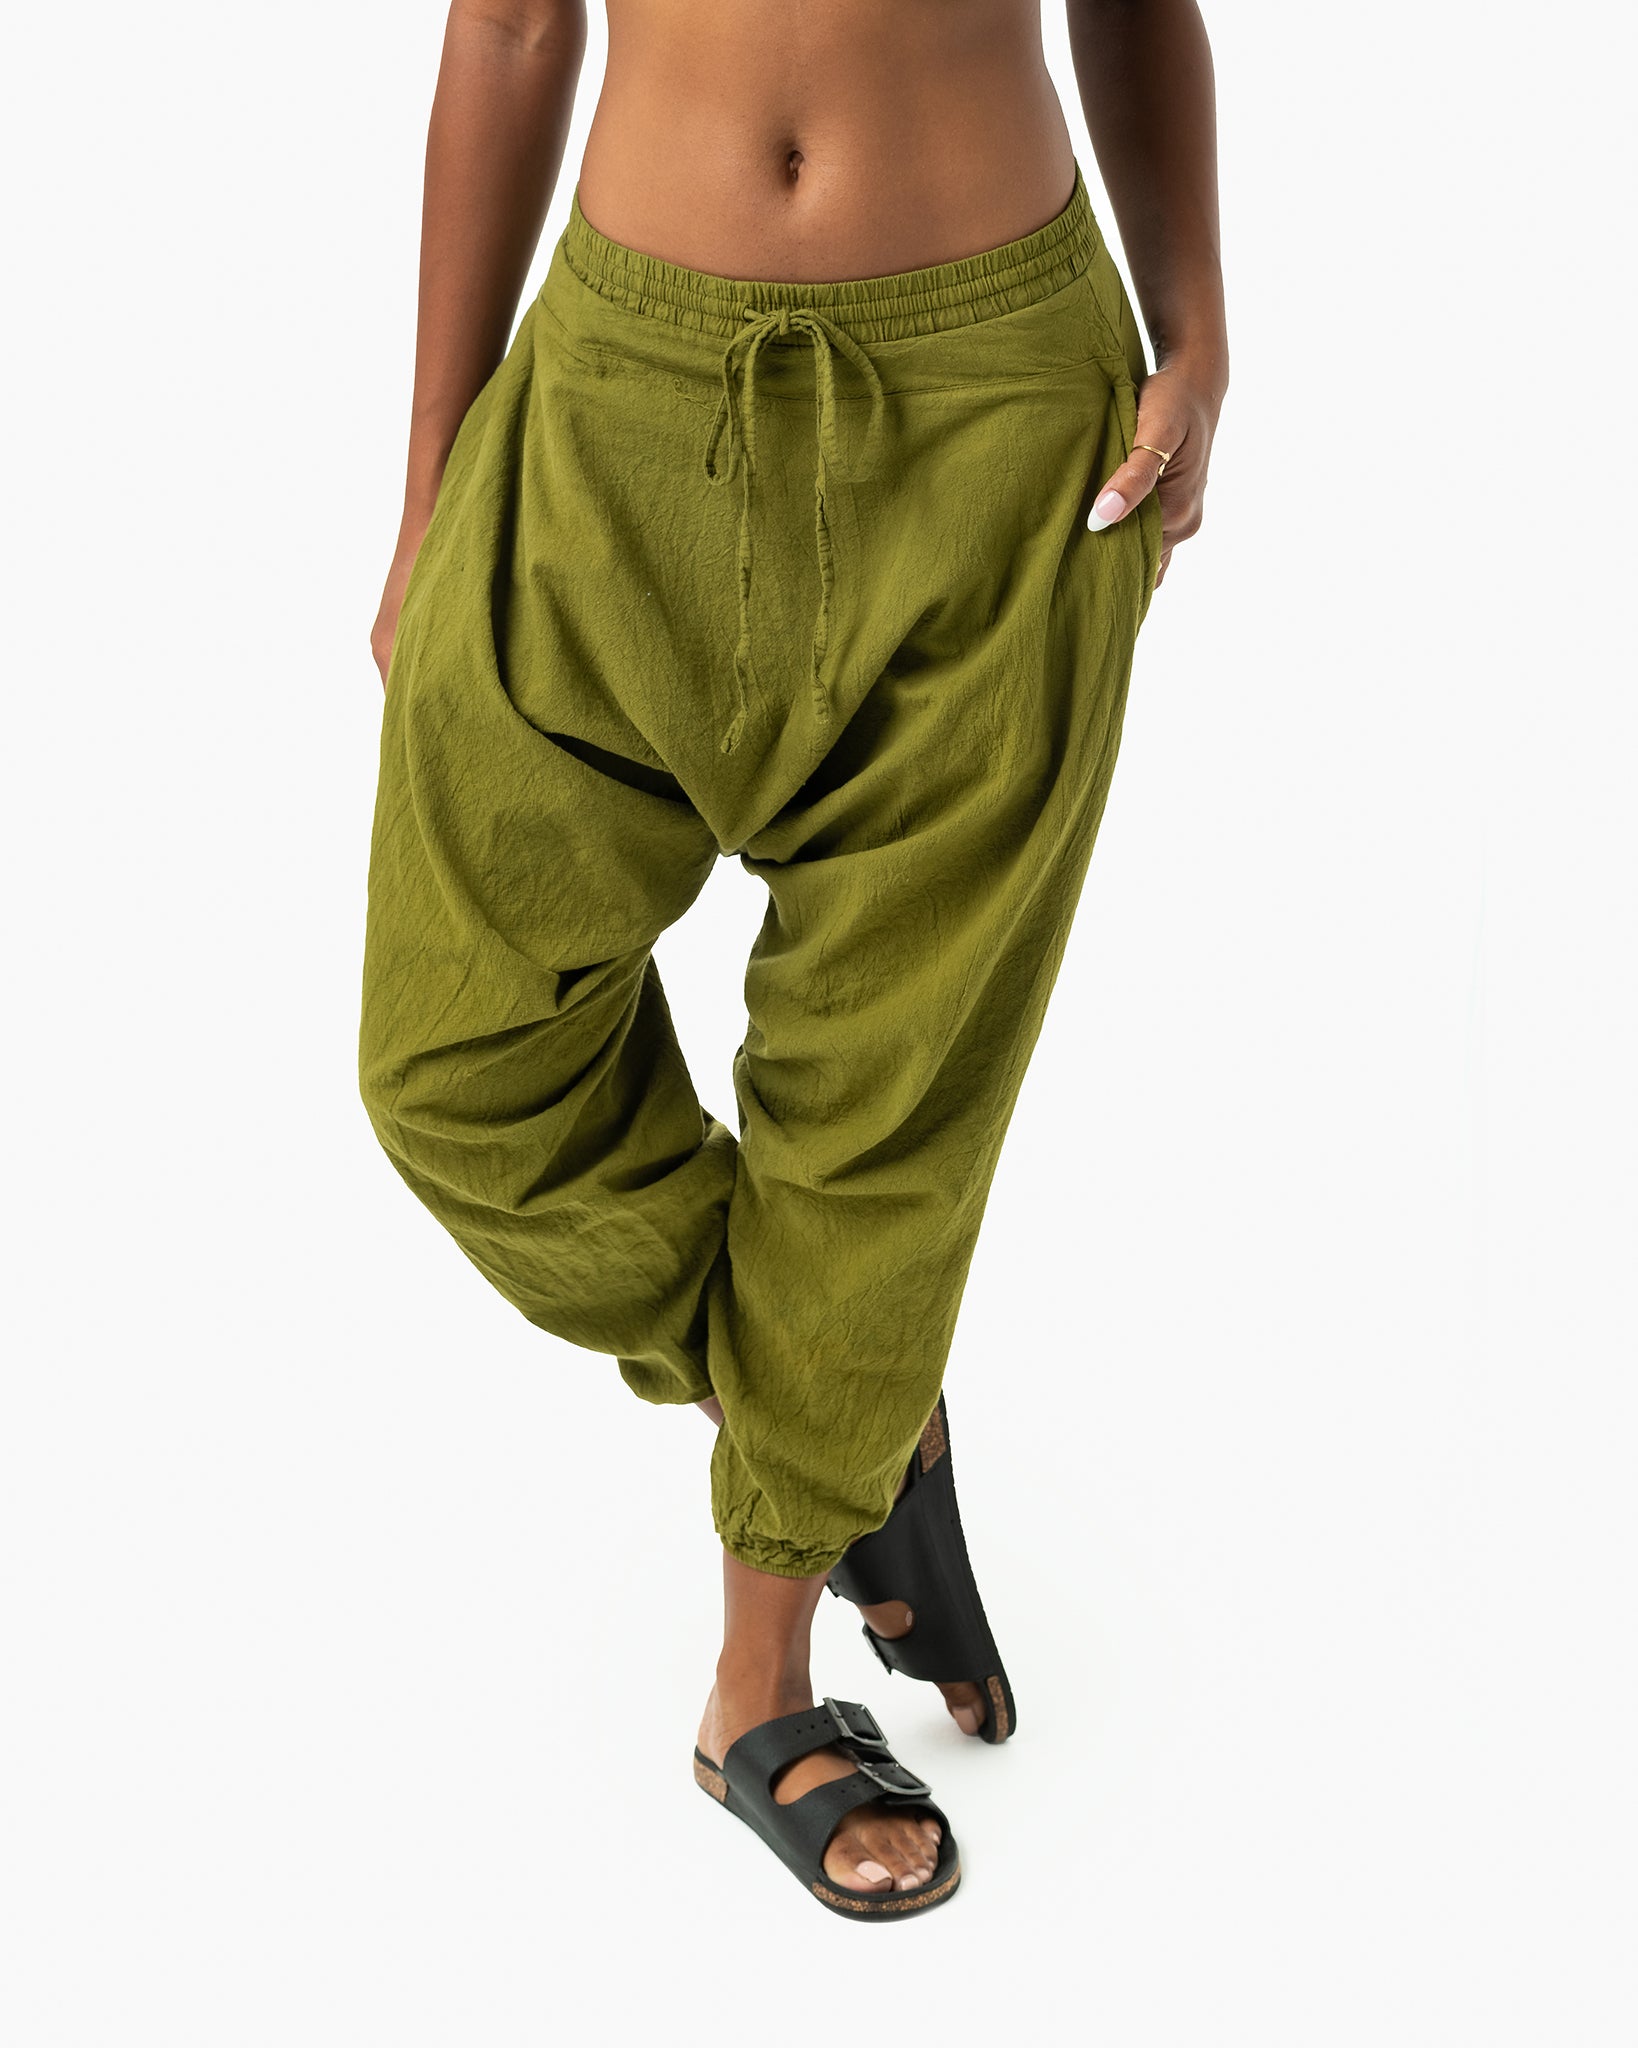 Tall Harem Pants Women, Drop Crotch Pants, Baggy Pants Cotton, Haremshose  Damen, Winter Harem Pants - agrohort.ipb.ac.id